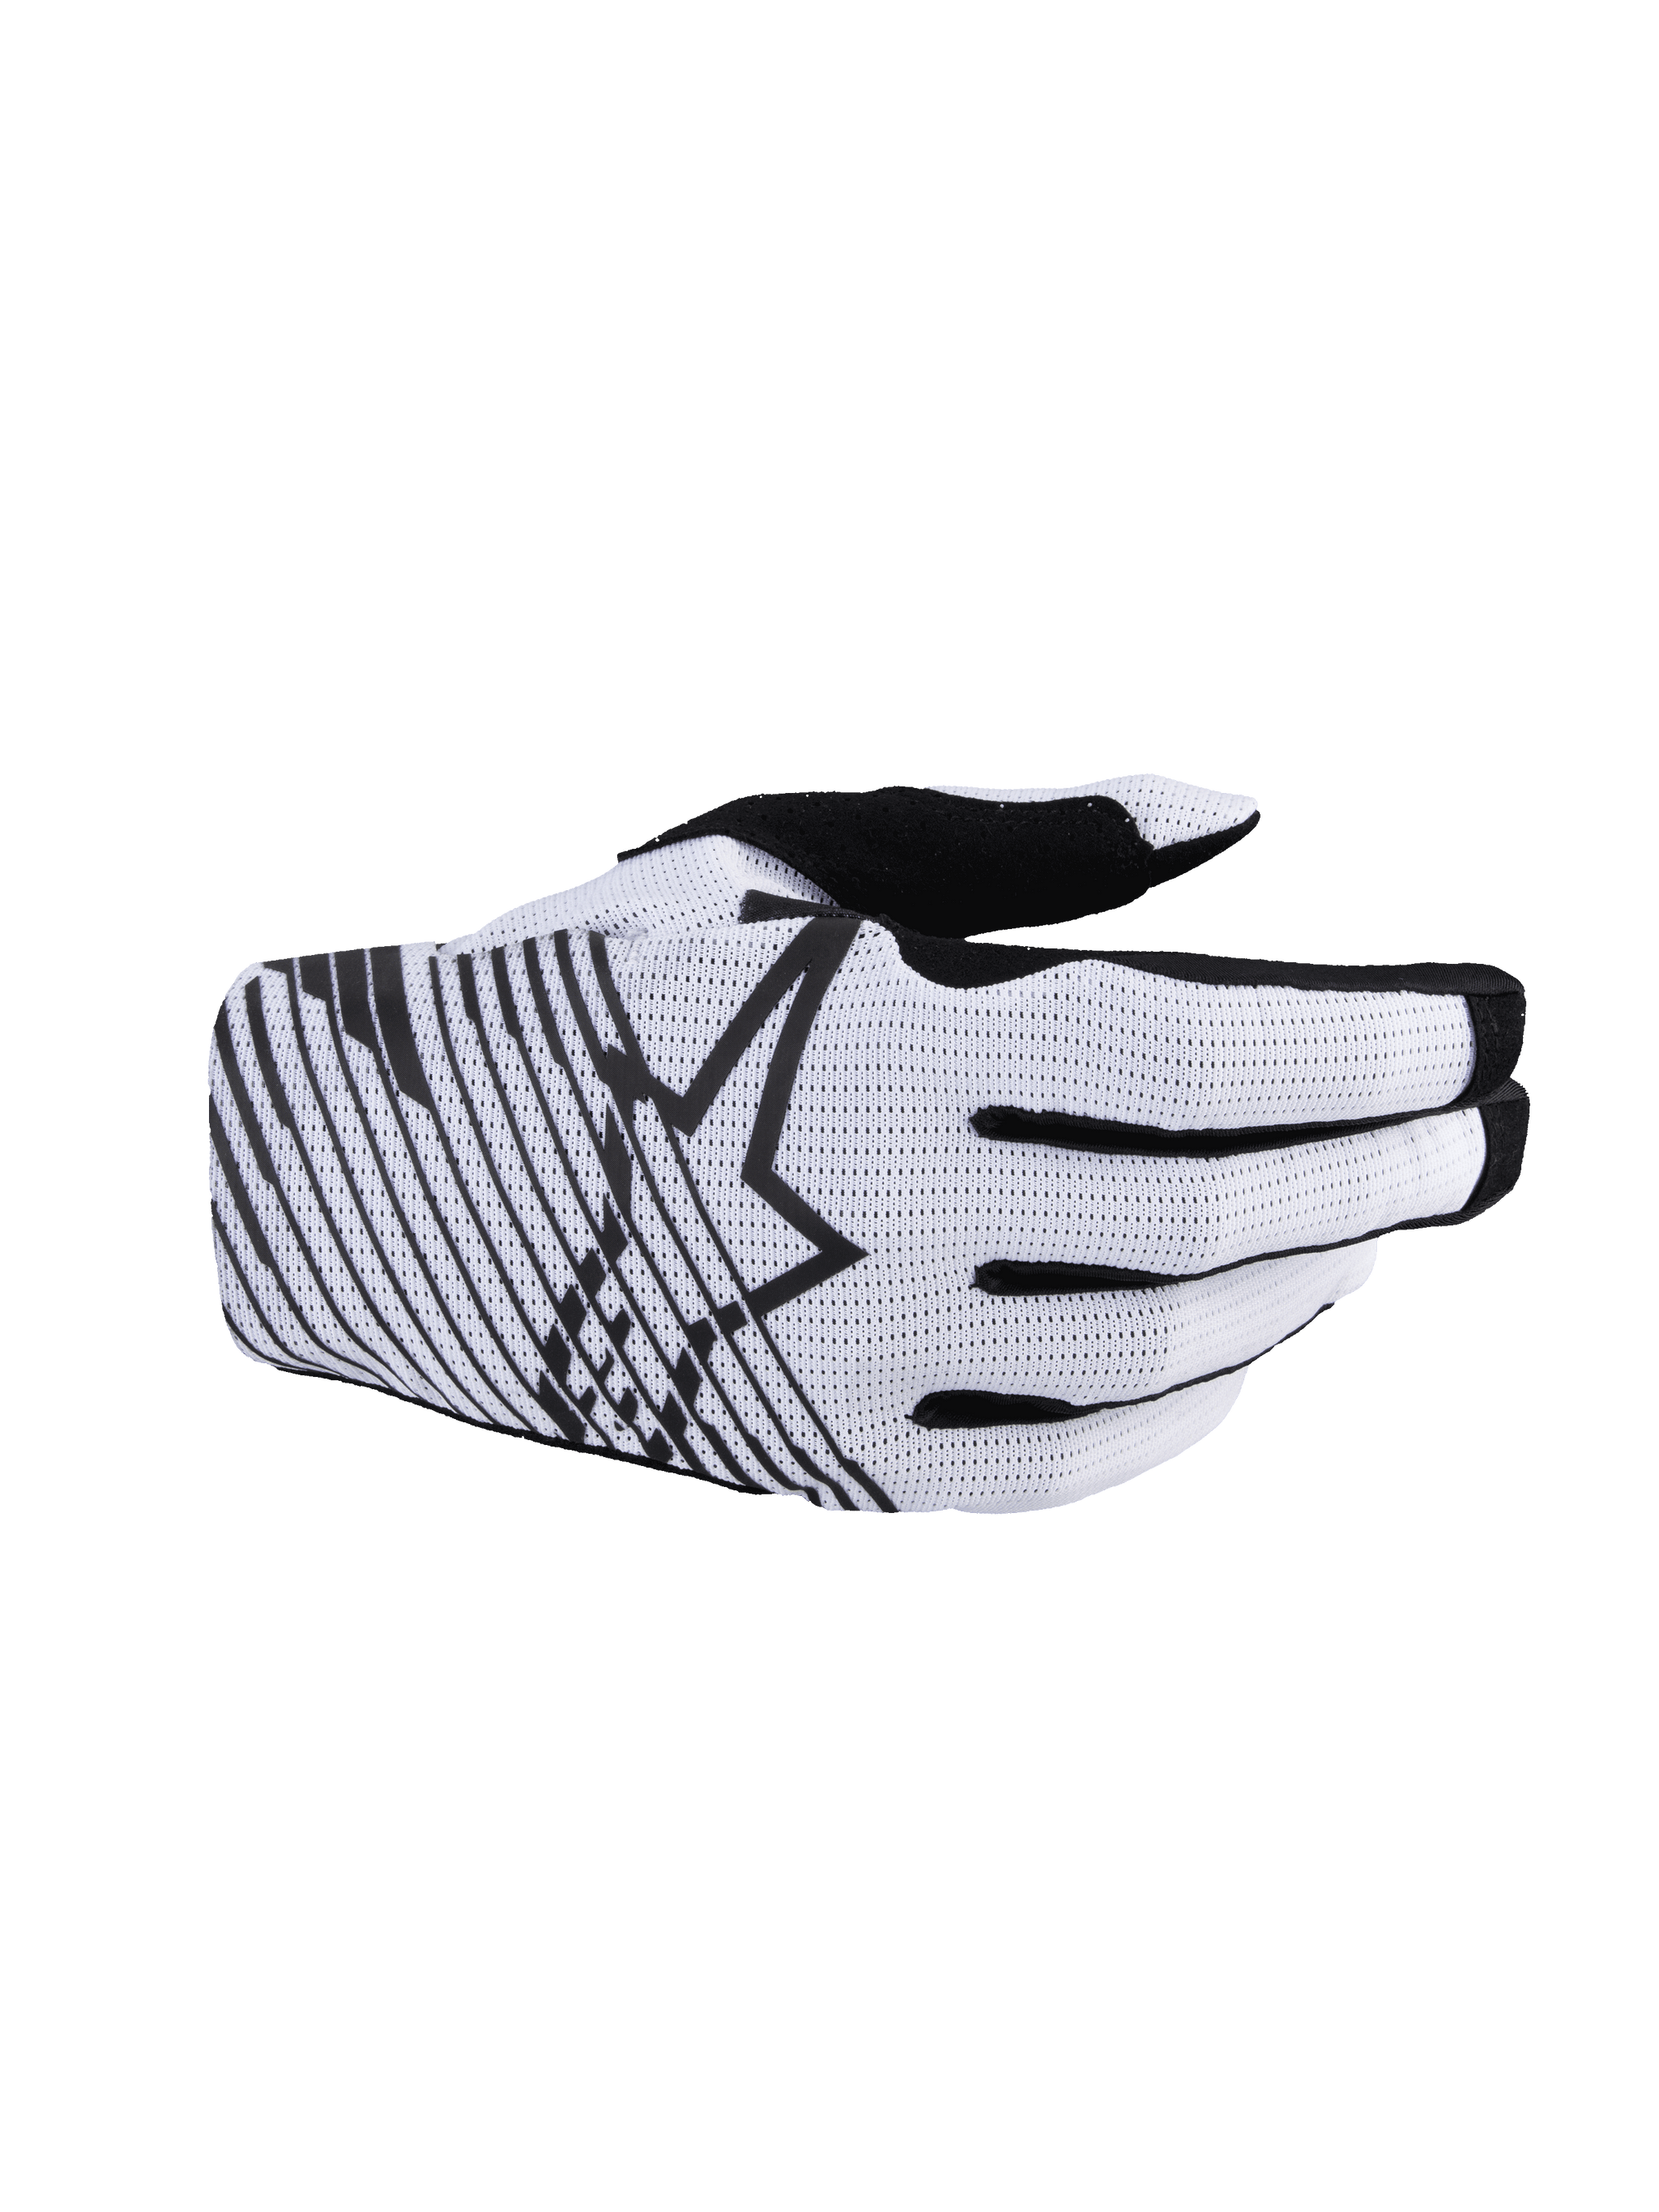 Radar Pro Gloves